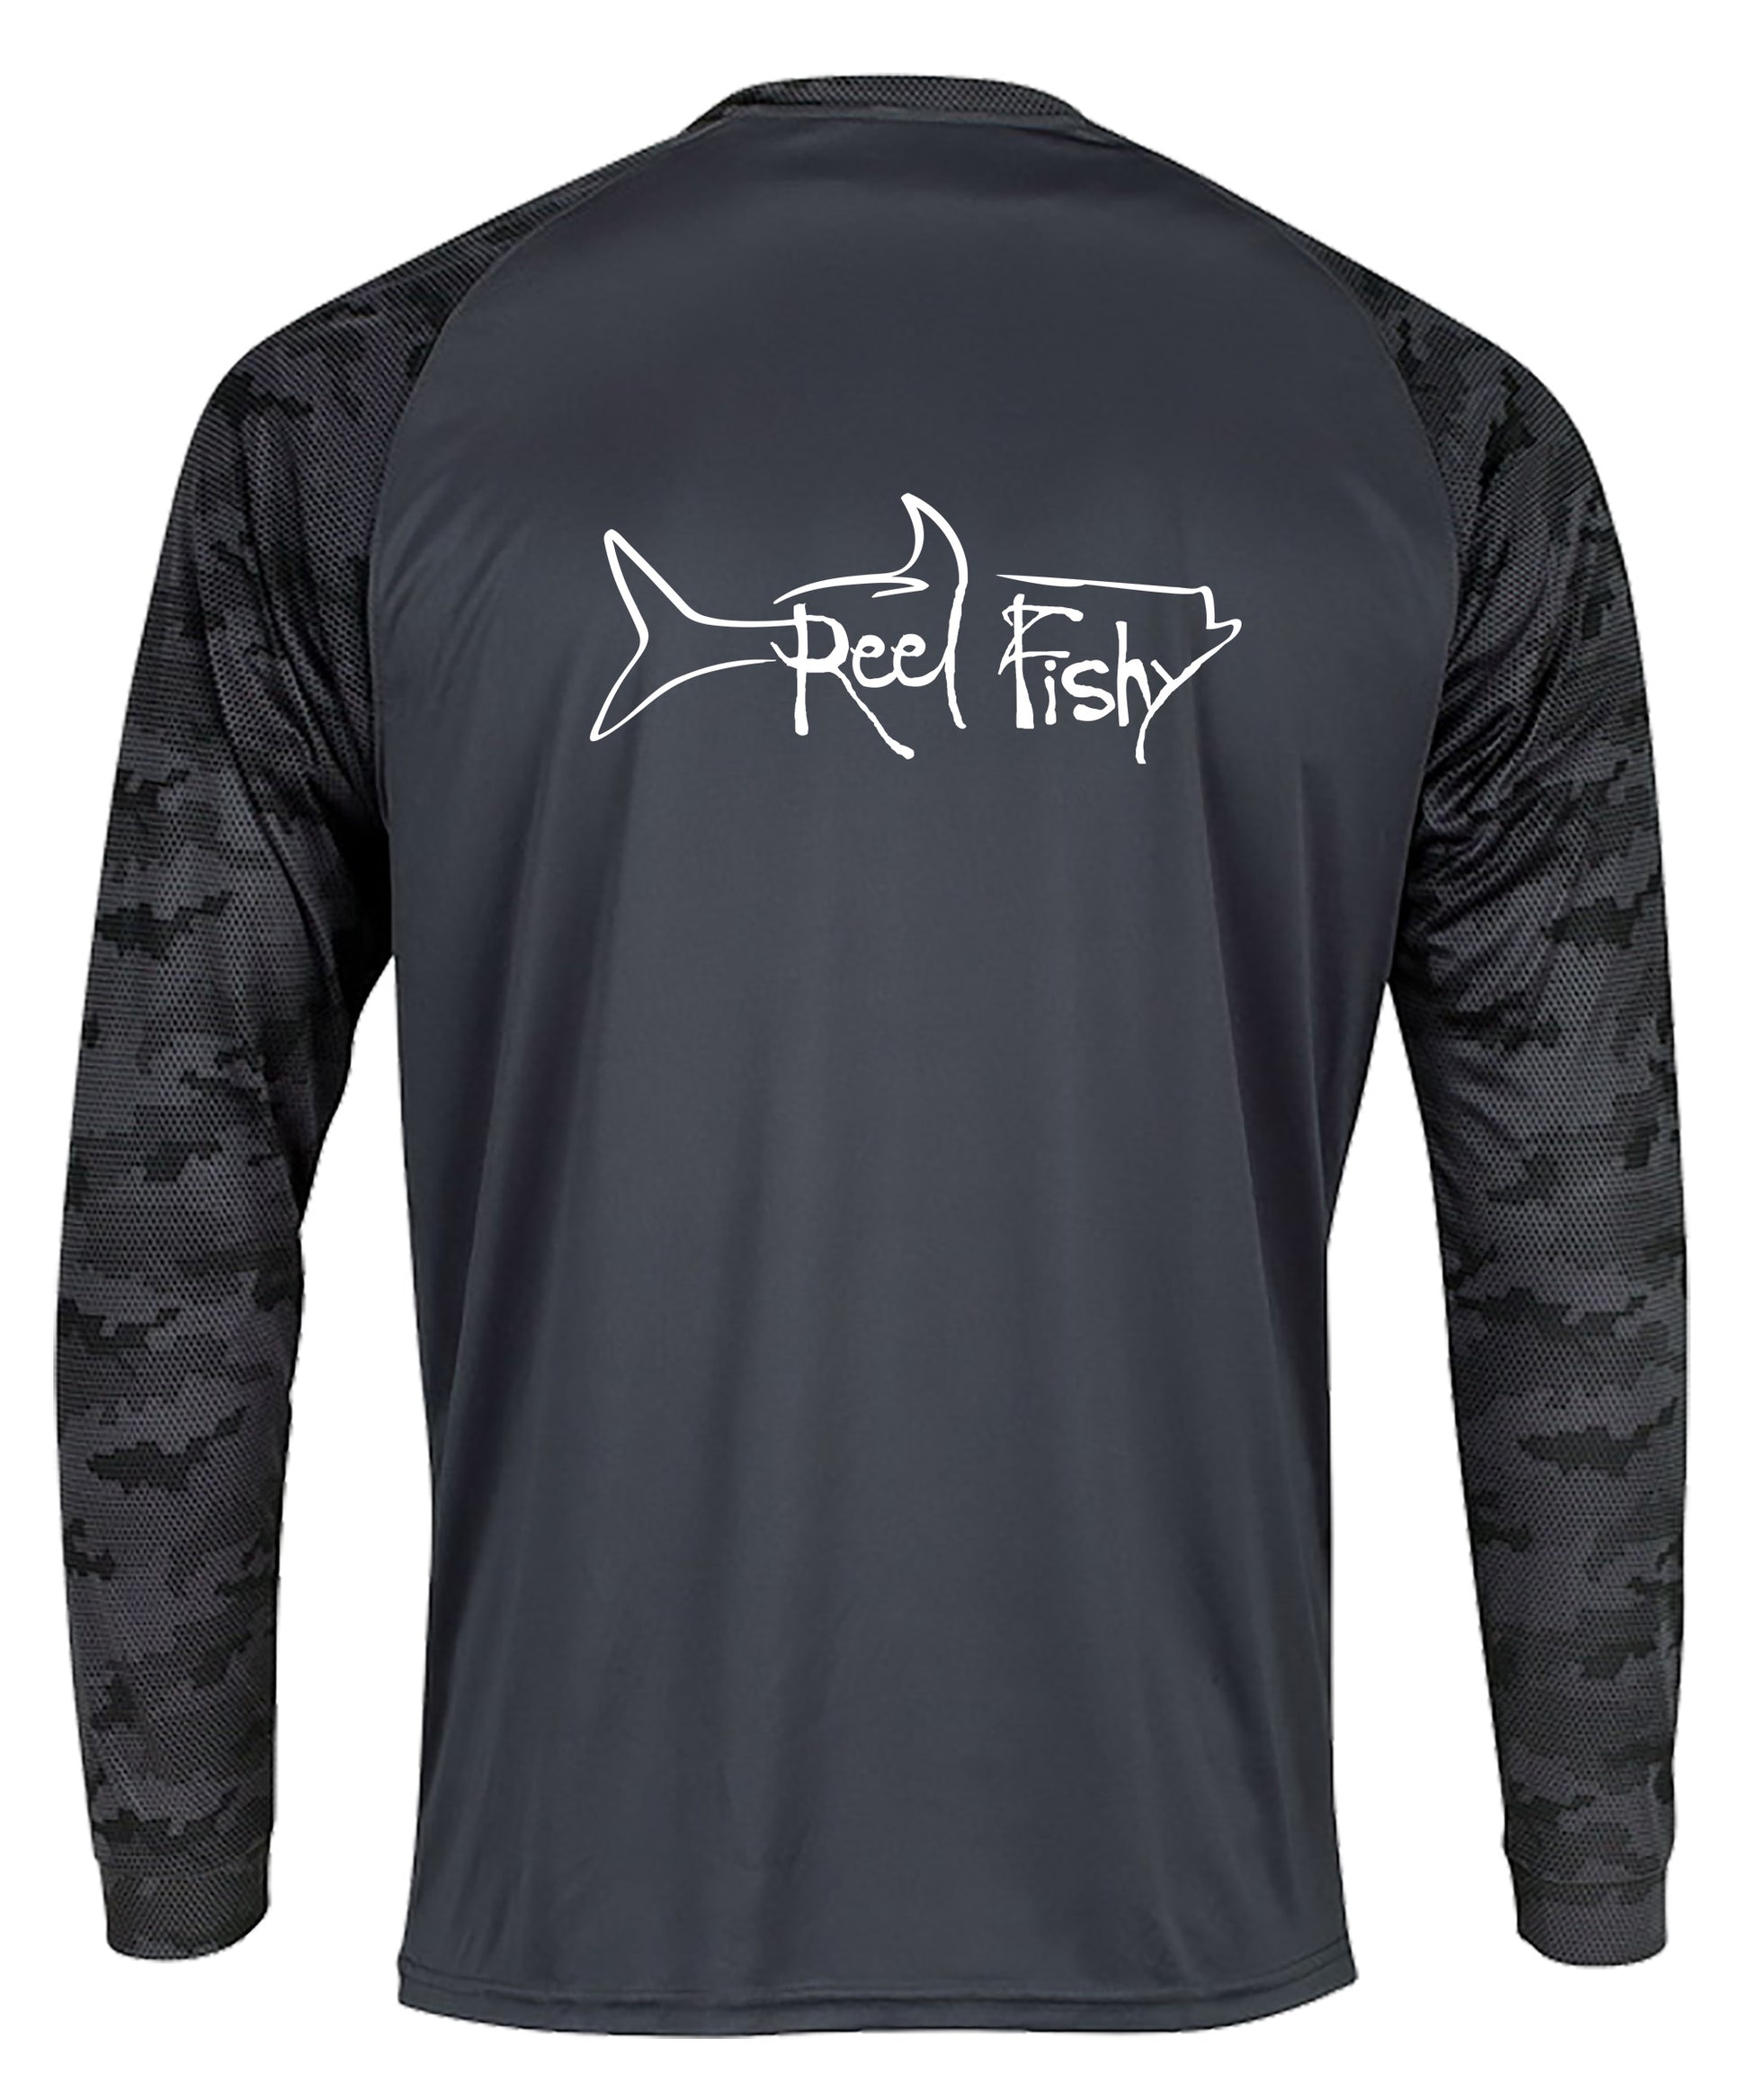 Tarpon Performance Digital Camo 50+uv Fishing Long Sleeve Shirts- Reel Fishy Apparel S / Graphite Camo - unisex